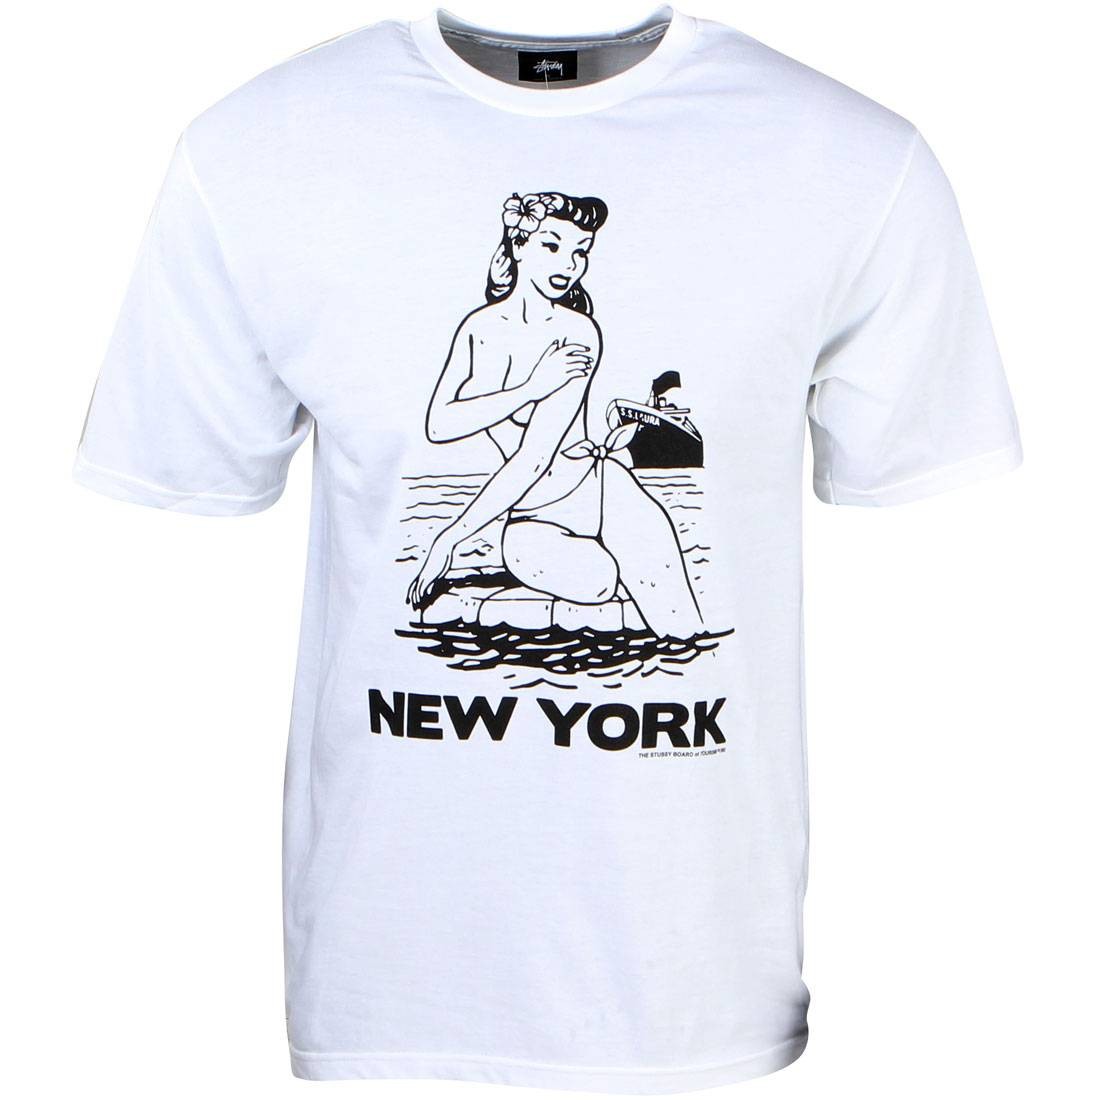 Stussy Men Aloha Cities Tee - New York (white / black)